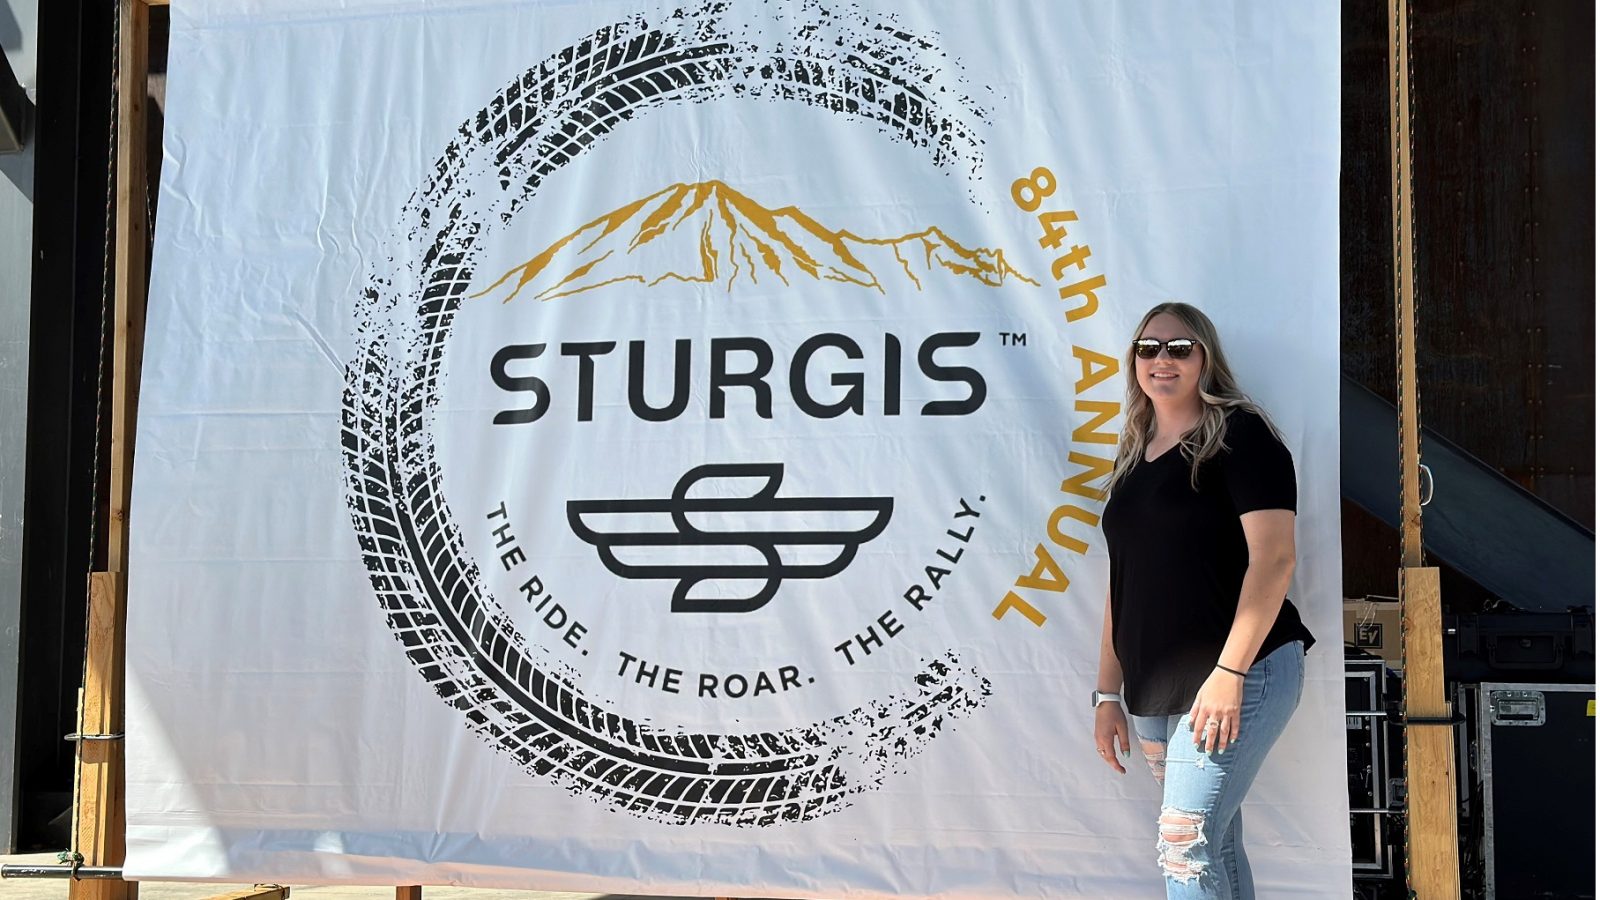 Morgan at Sturgis